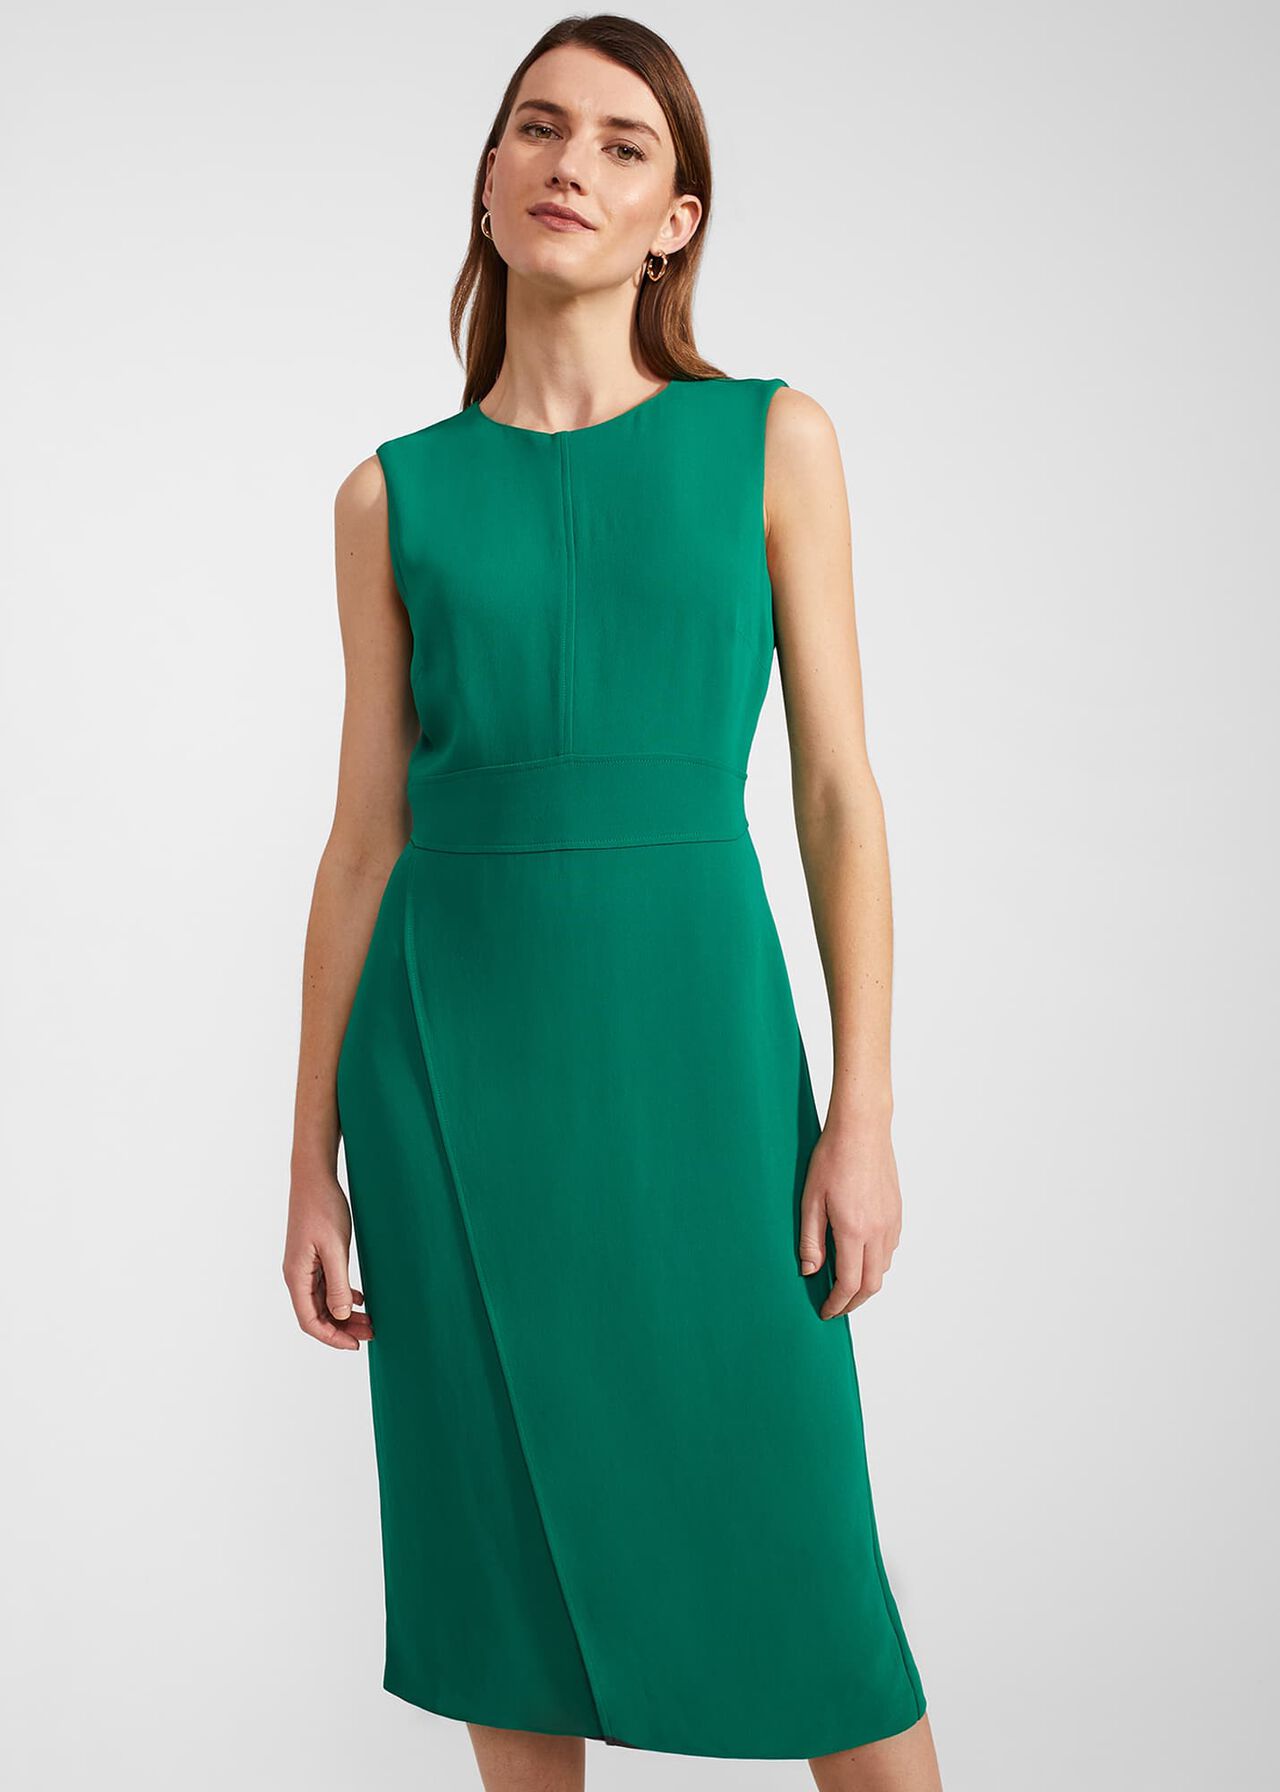 Maura Dress, Malachite Green, hi-res